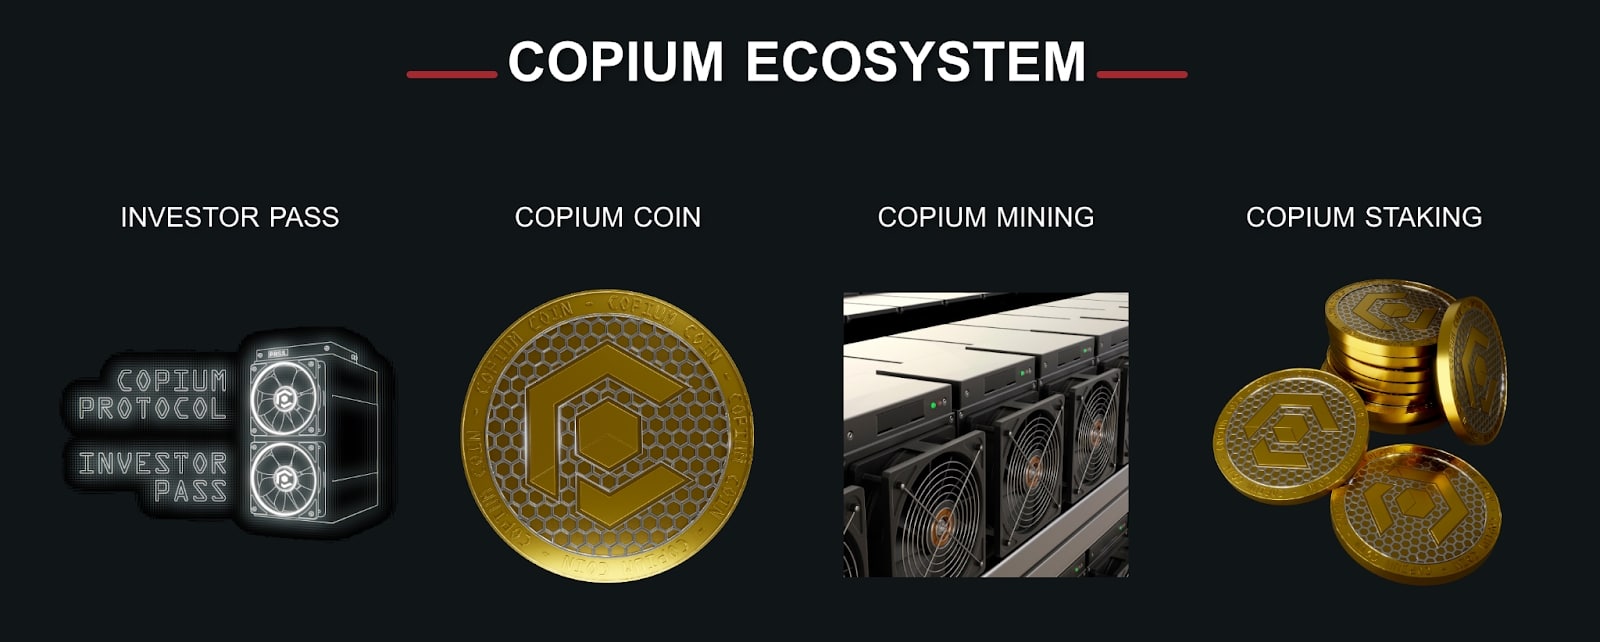 minar bitcoin que es copium